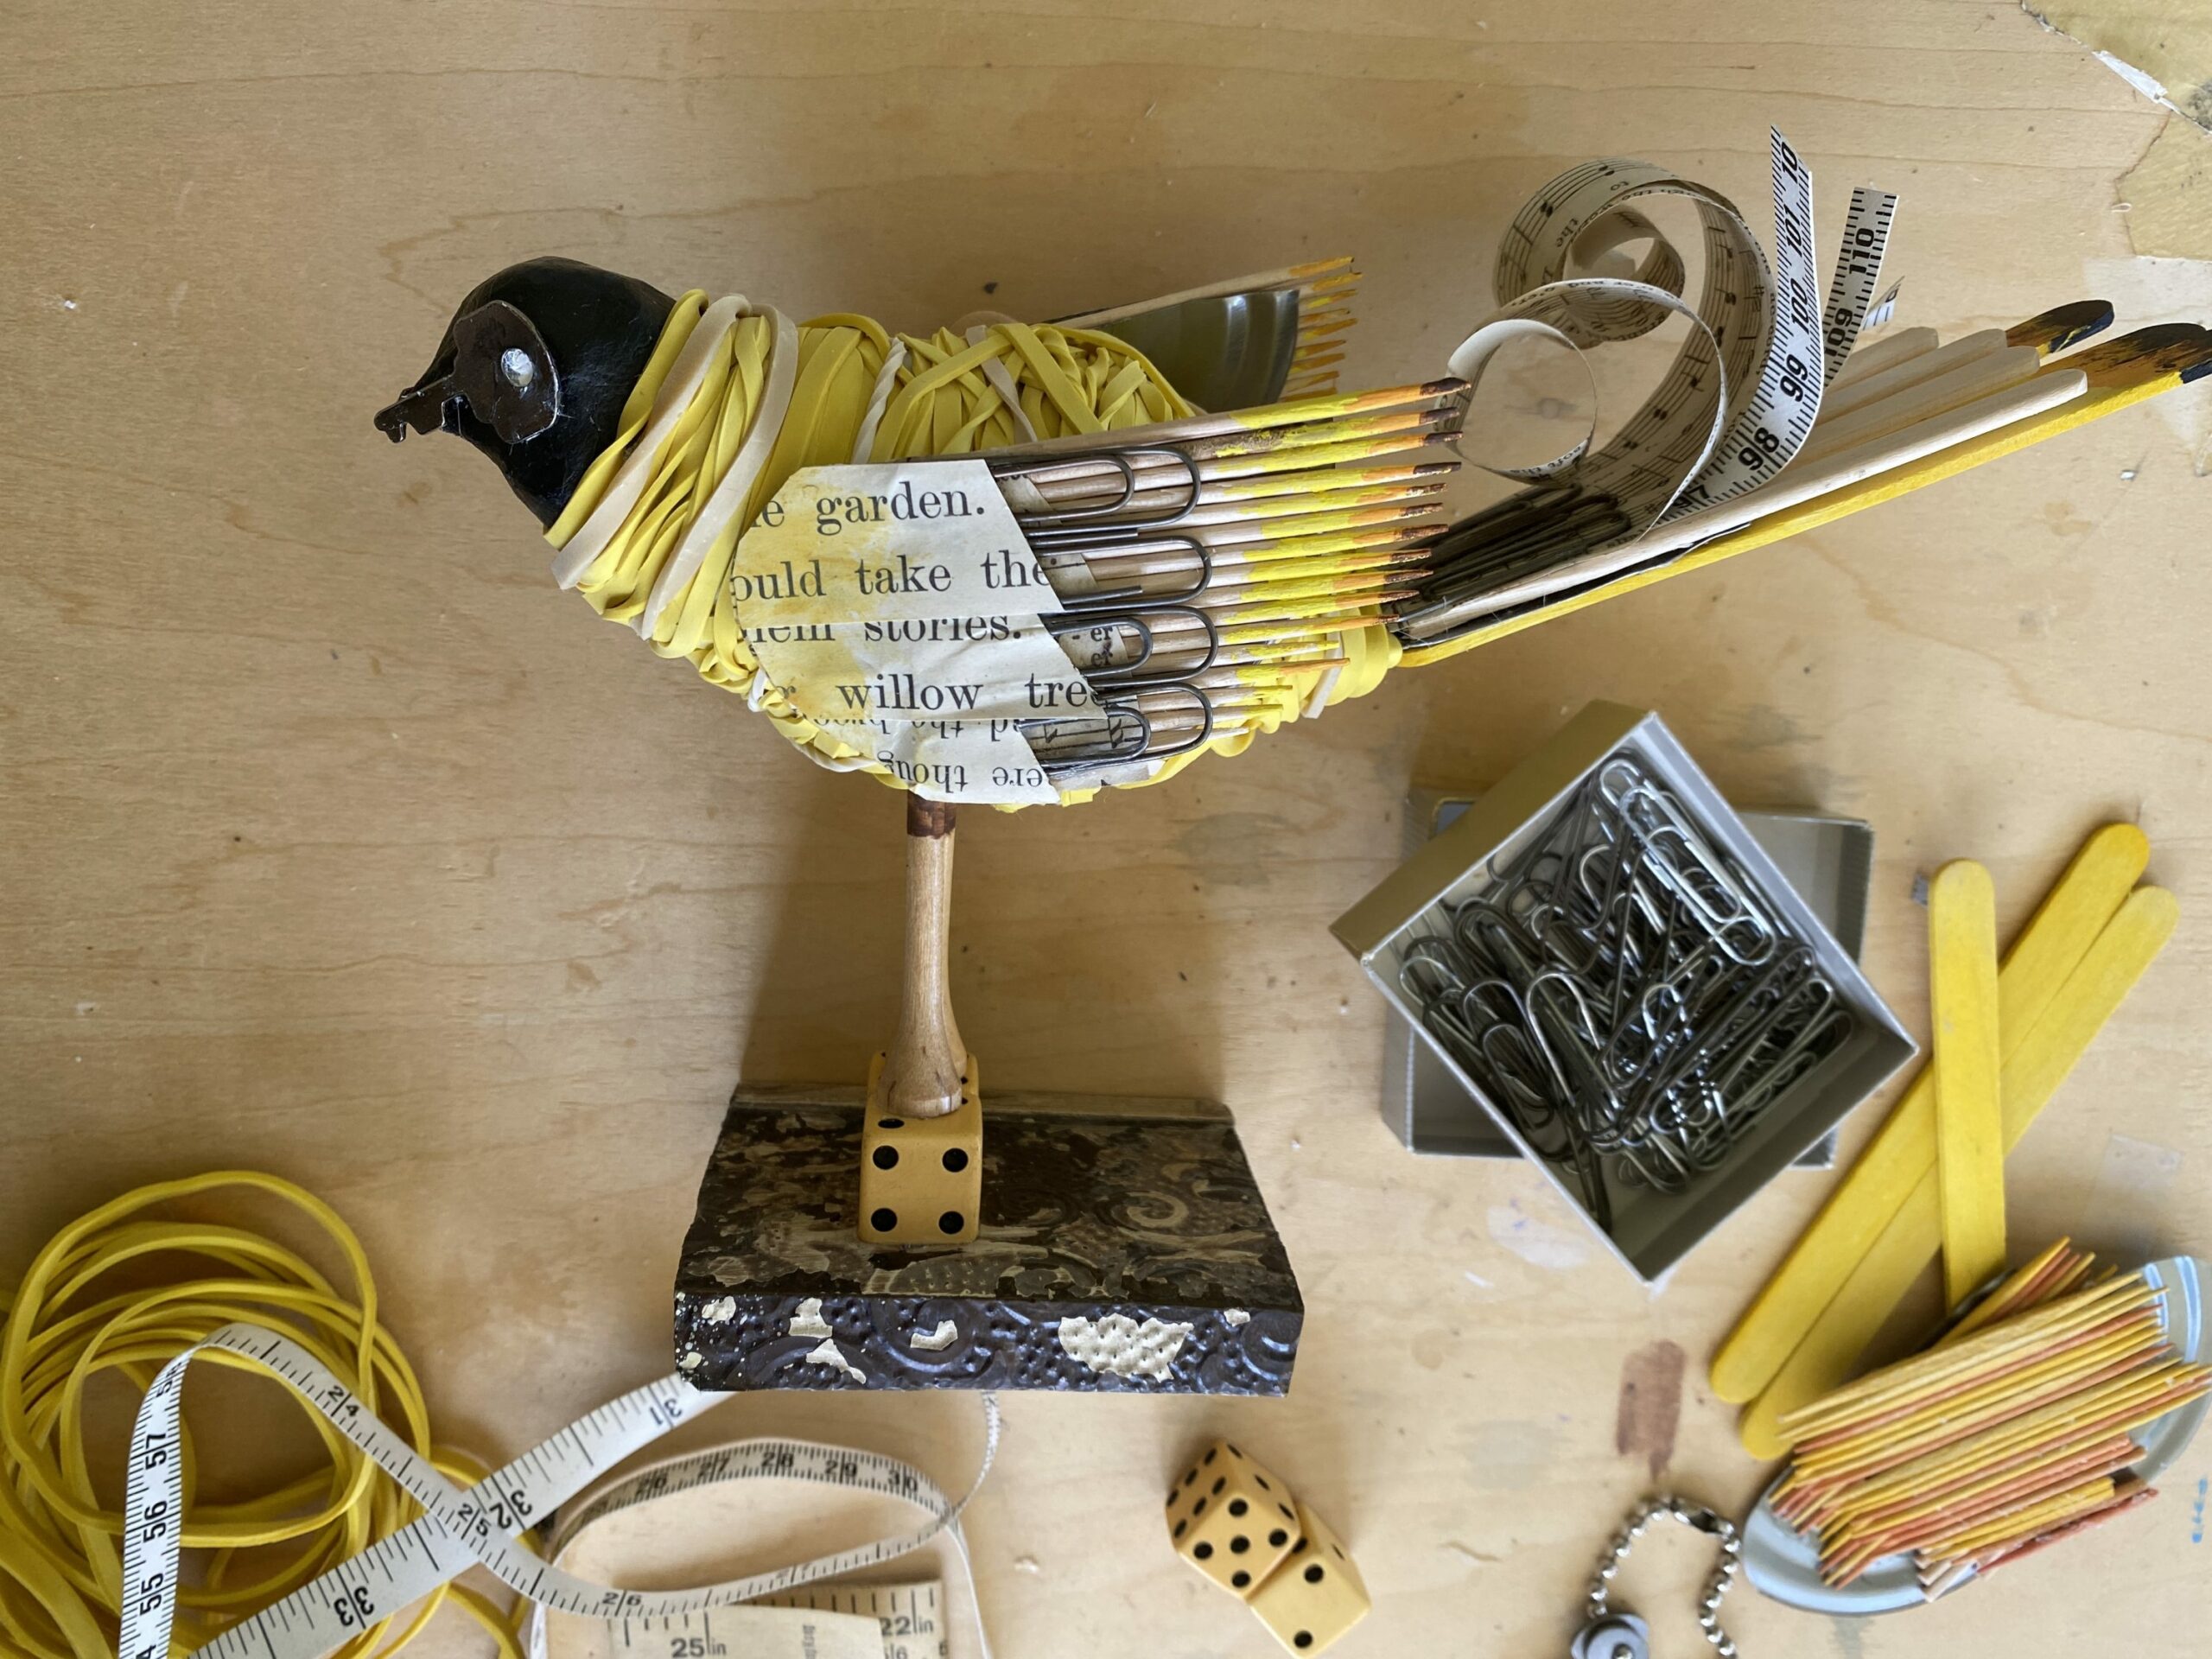 Junkful Art Birds with Lori Siebert | Instant Access!